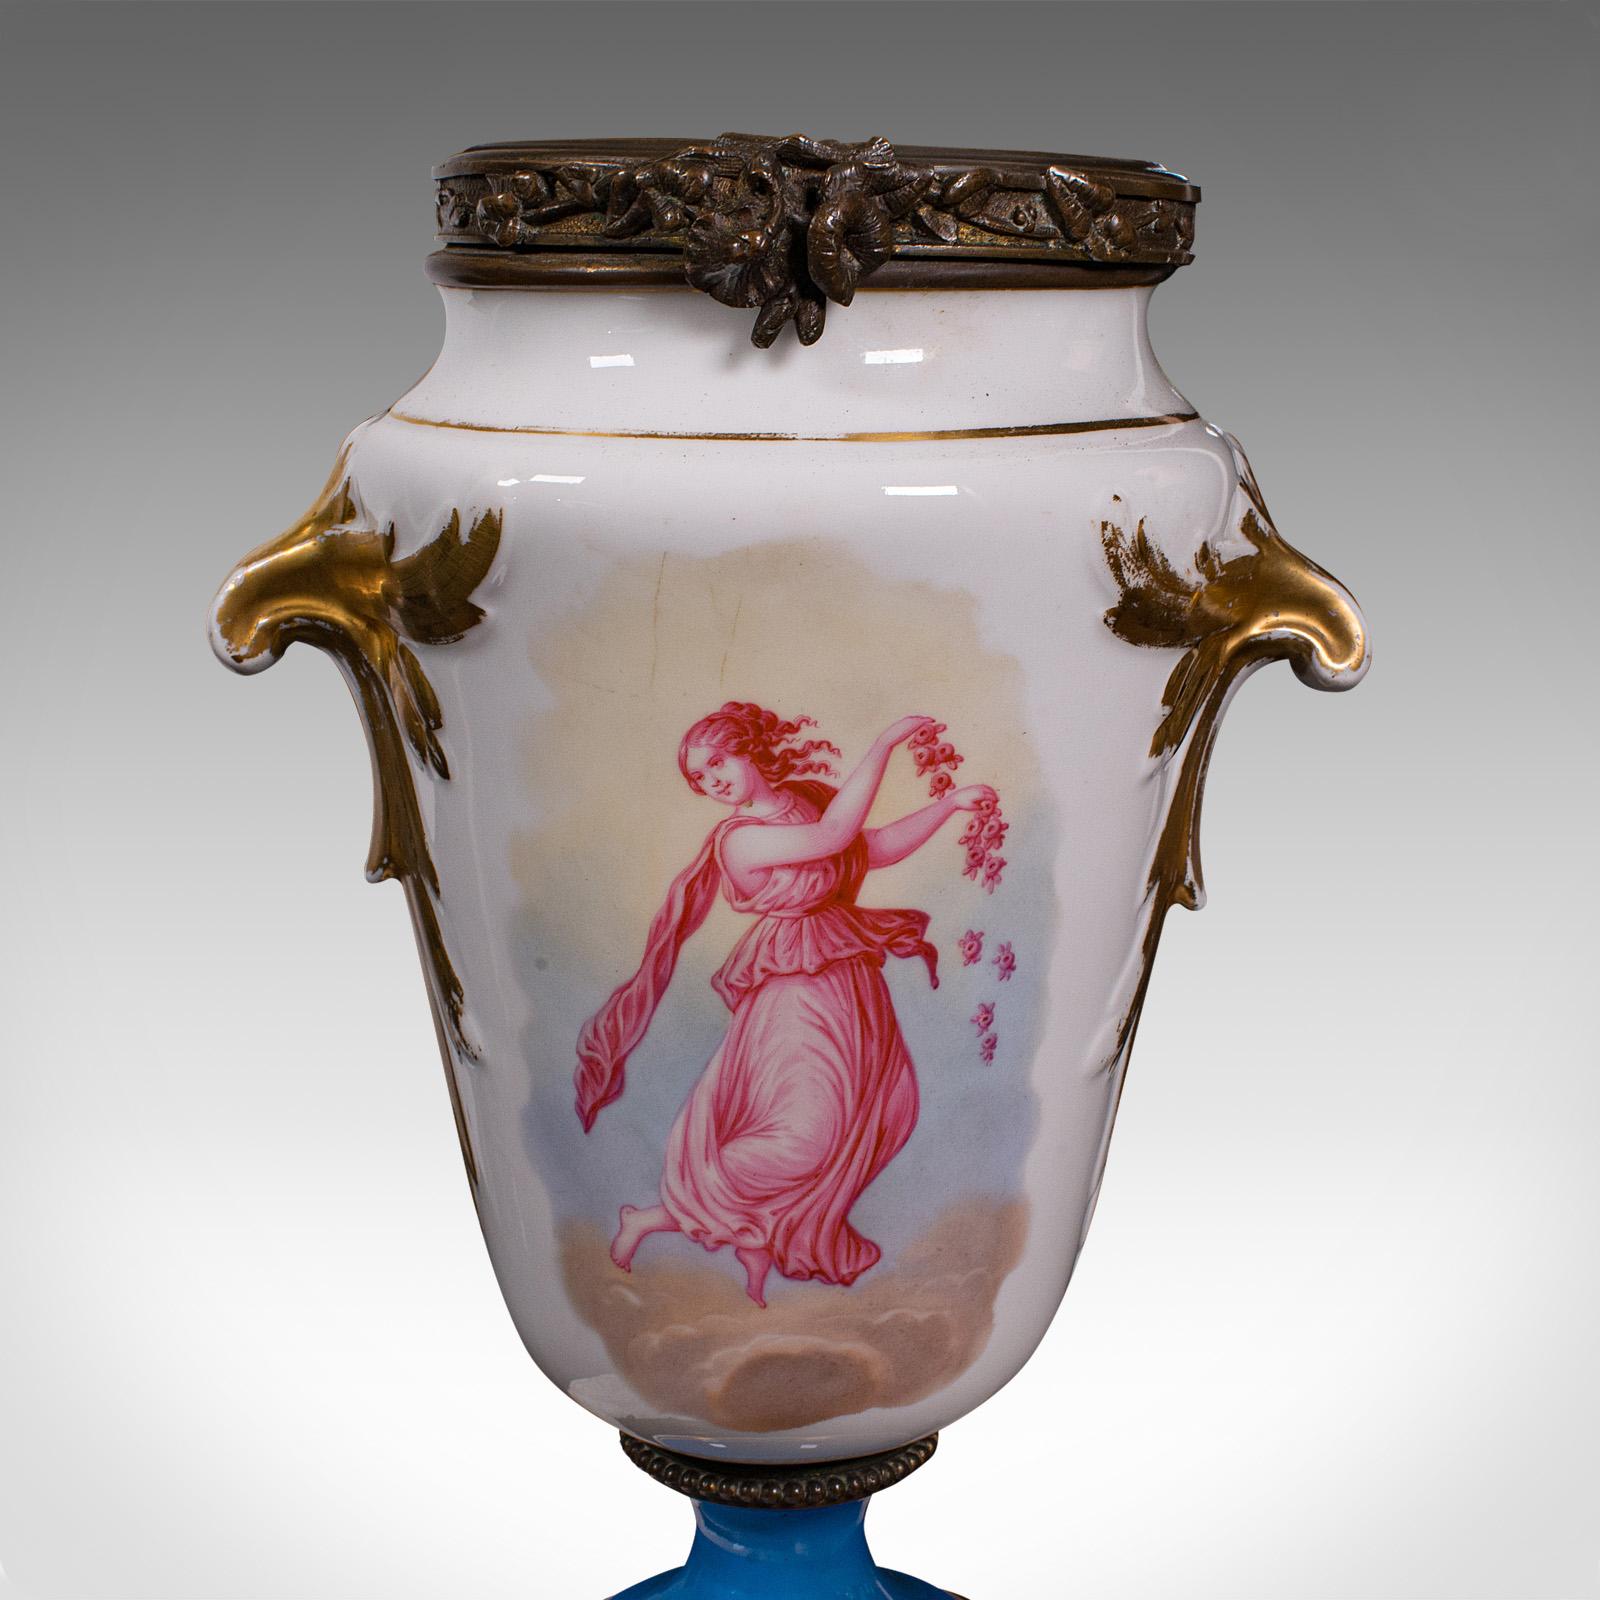 Antique Decorative Jardiniere, French, Ceramic, Display Planter, Vase, Victorian For Sale 5